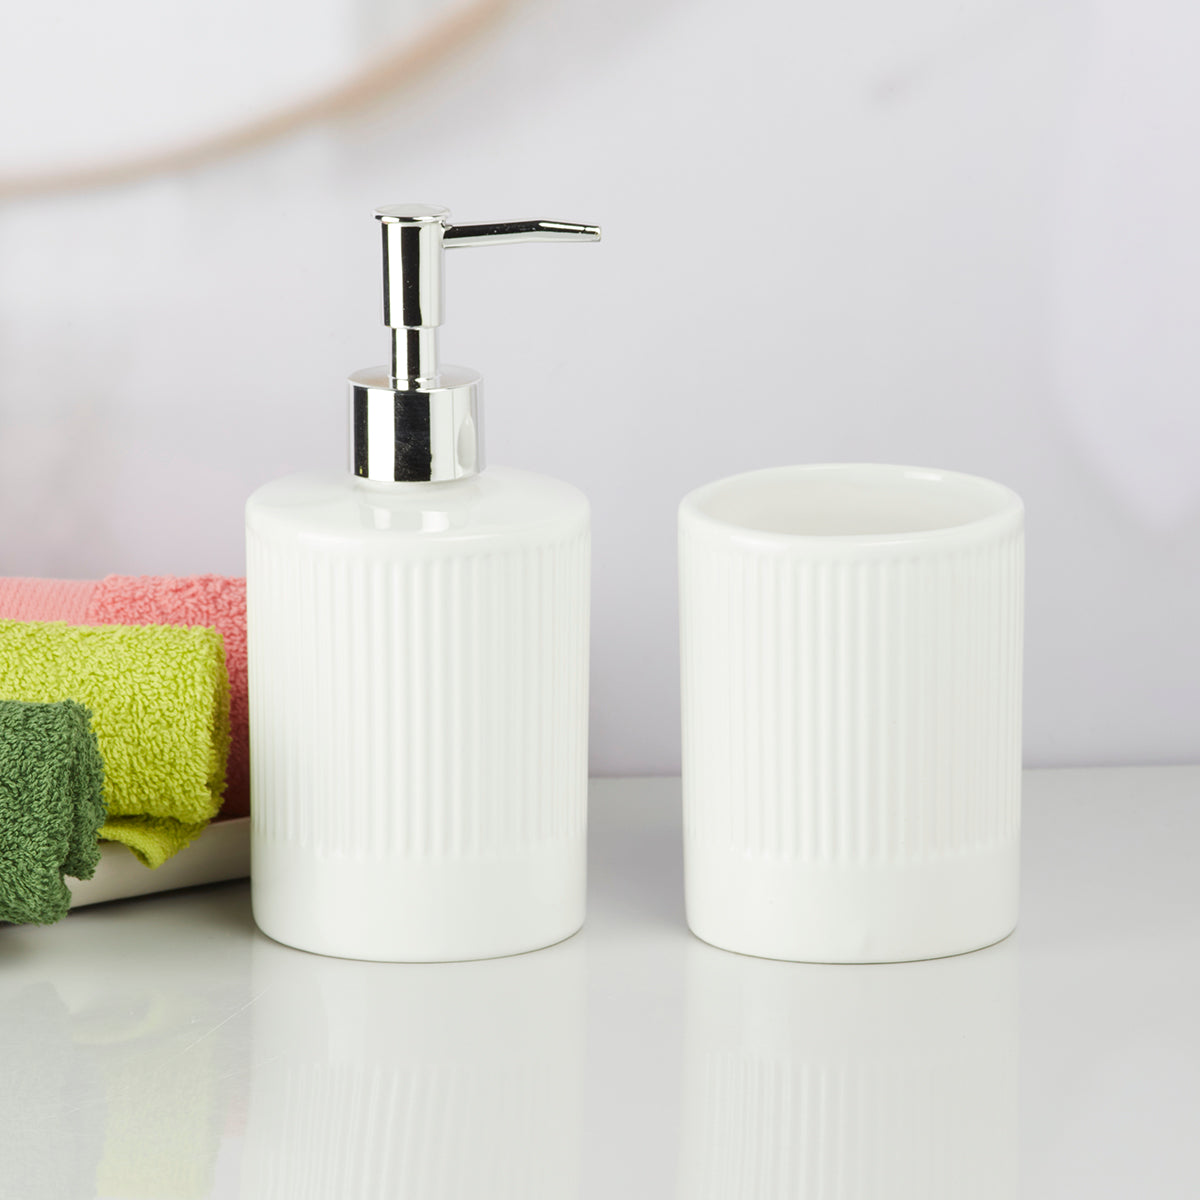 Ceramic Bathroom Accessories Set of 2 Bath Set with Soap Dispenser (9605)